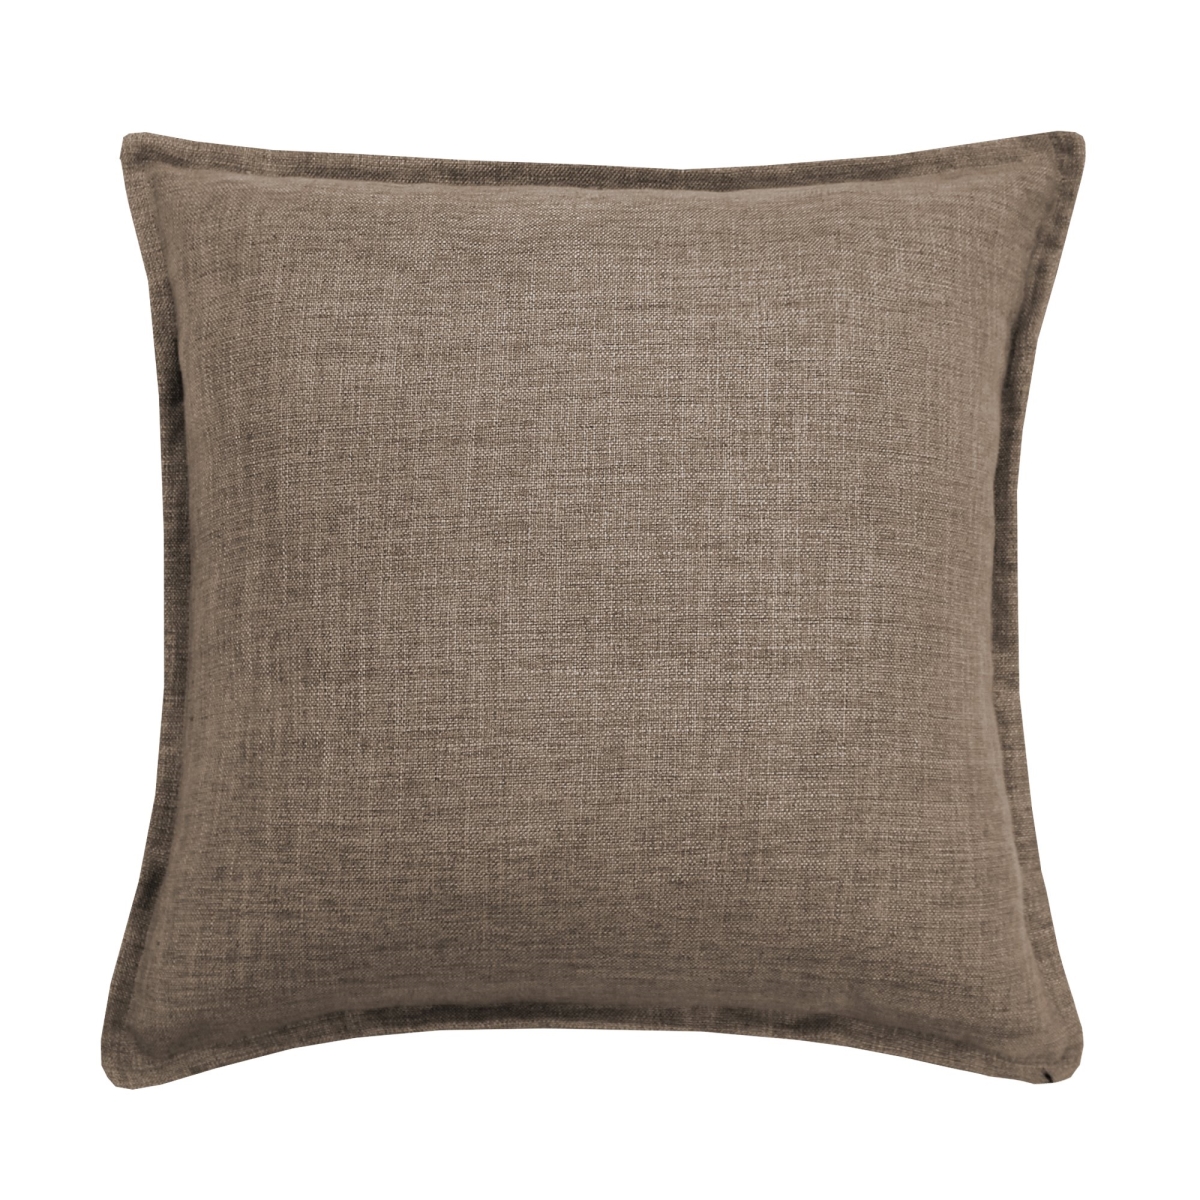 Sq-pi-libei-1818 18 X 18 In. Linen Decorative Cushion, Beige - 100 Percent Polyester